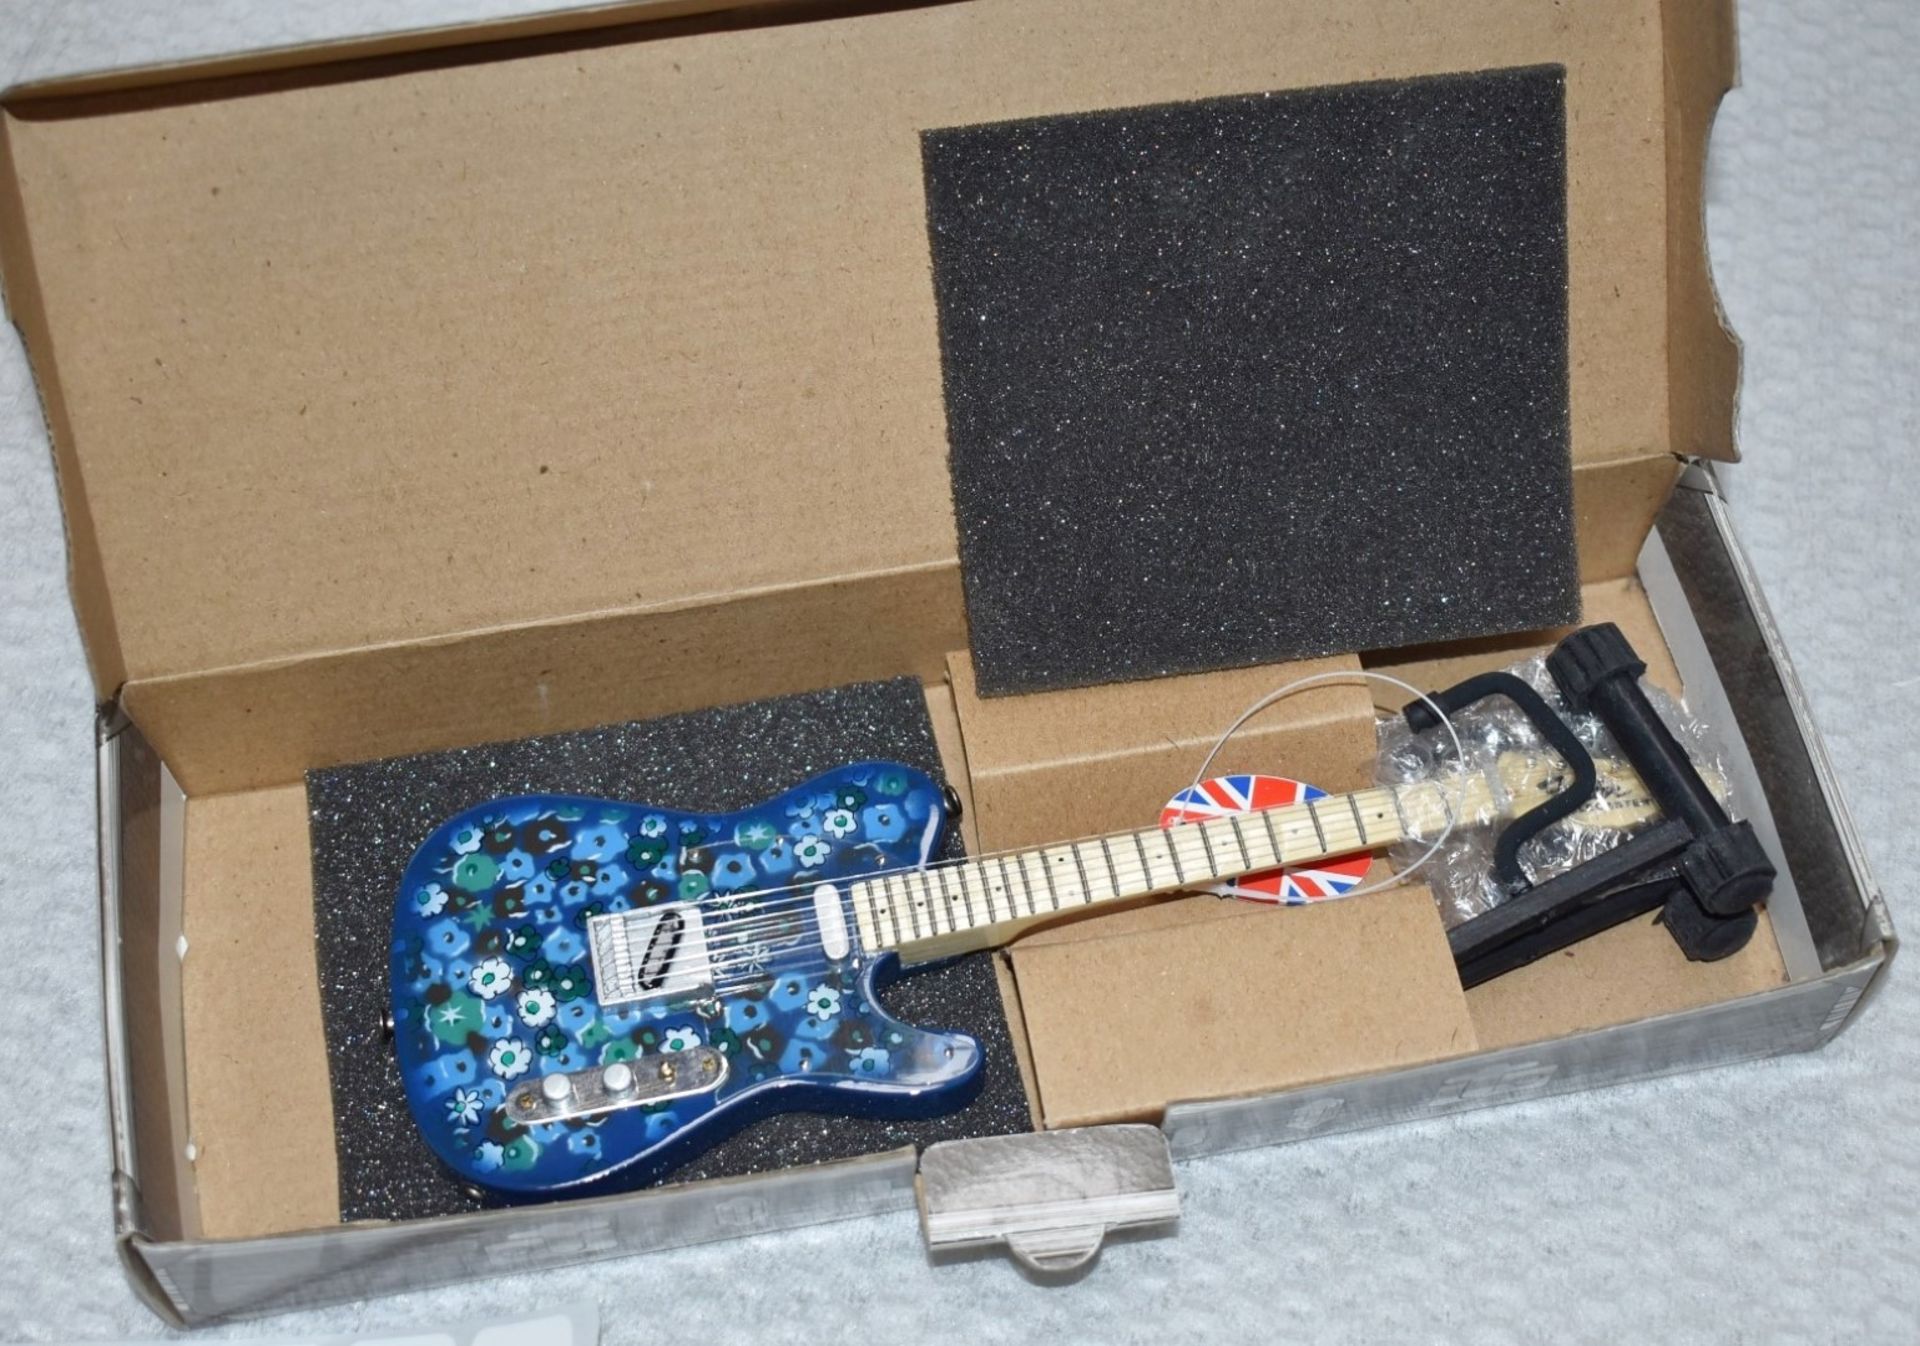 1 x Miniature Hand Made Guitar - Paisley Flower, Fender Telecastor - New & Unused - RRP £35 - Image 2 of 4